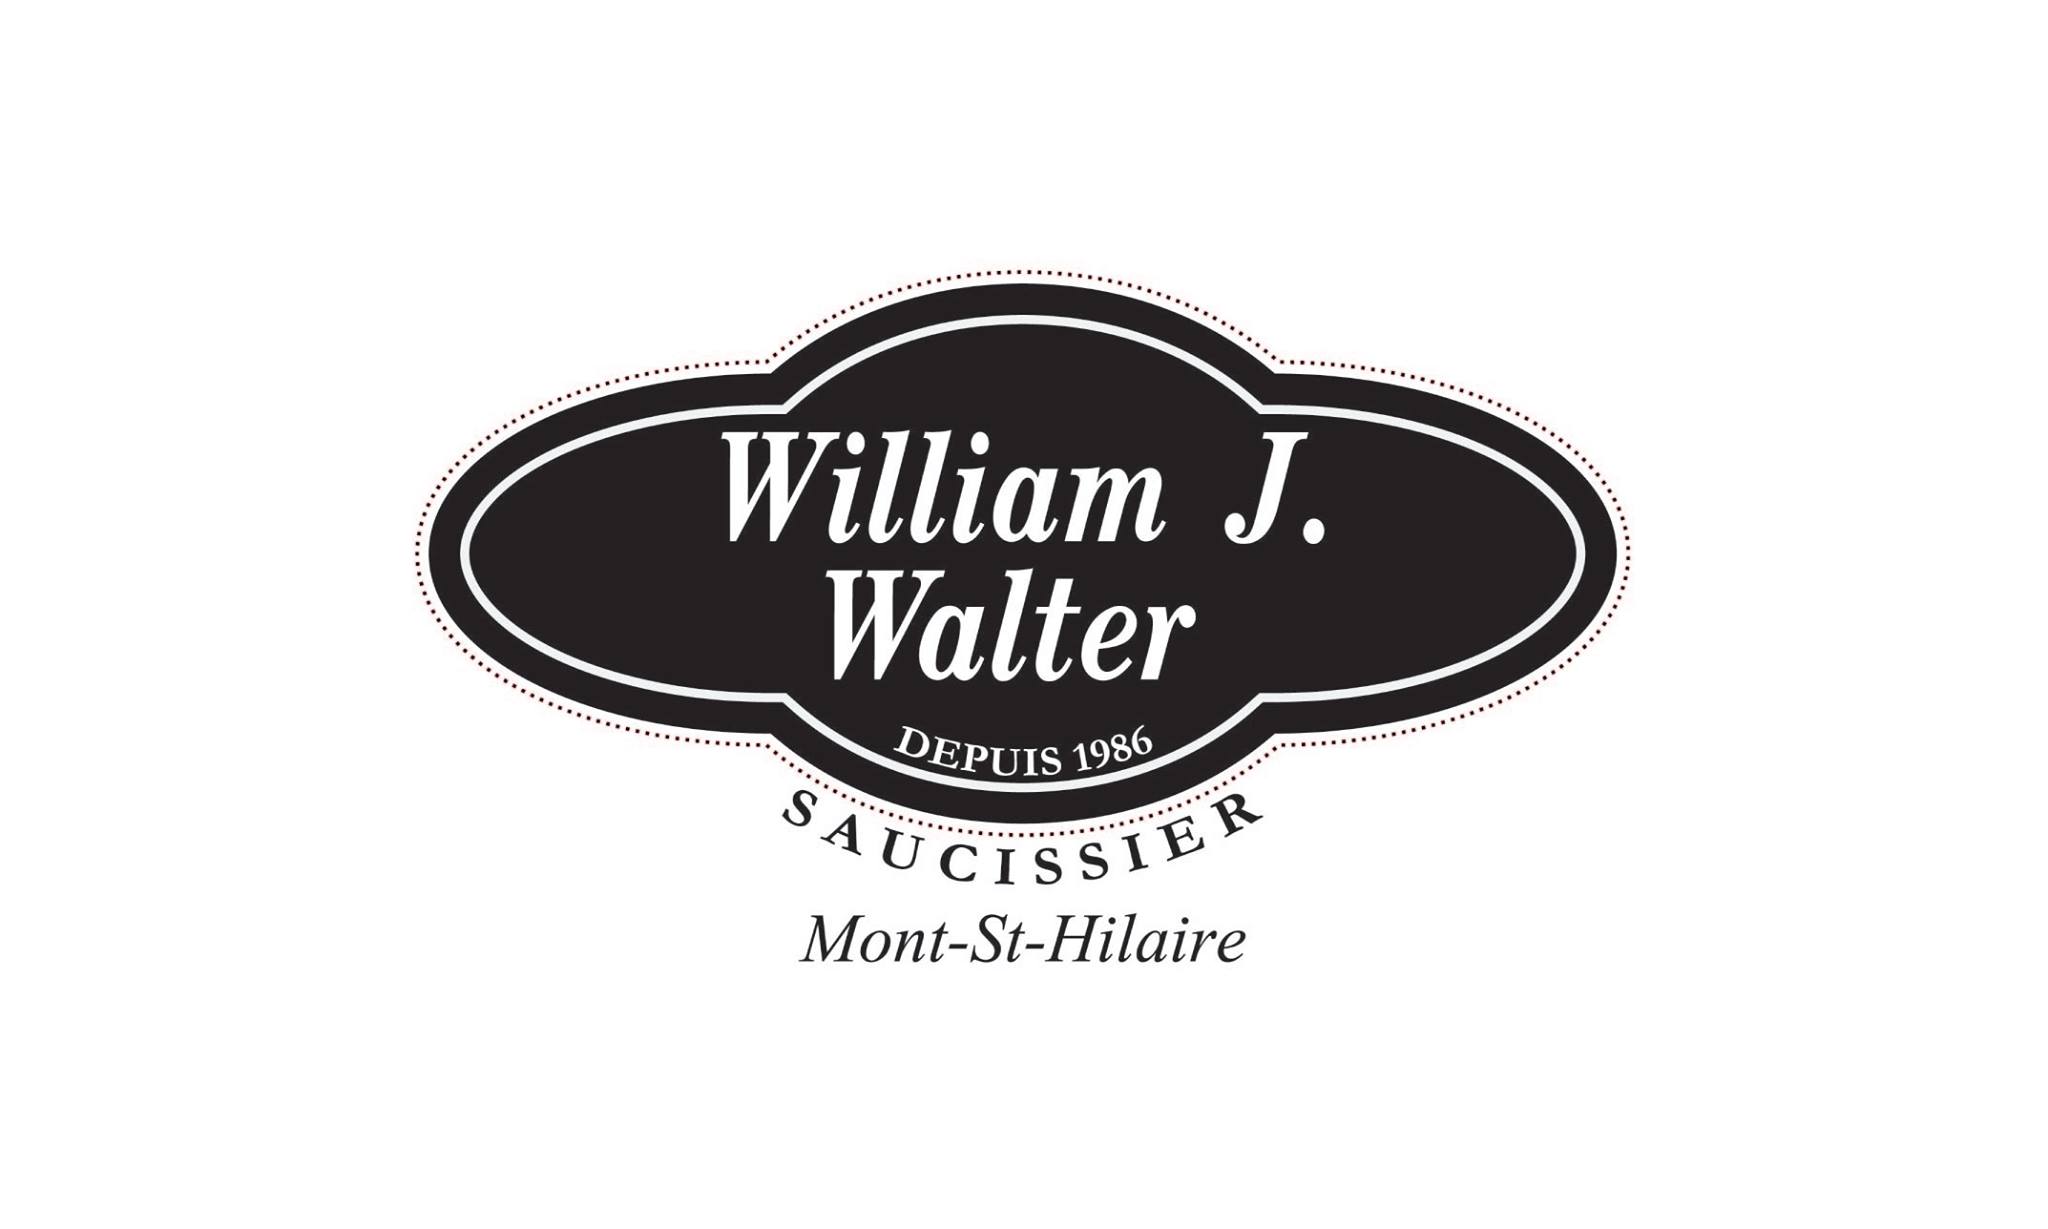 Saucissier  William J. Walter